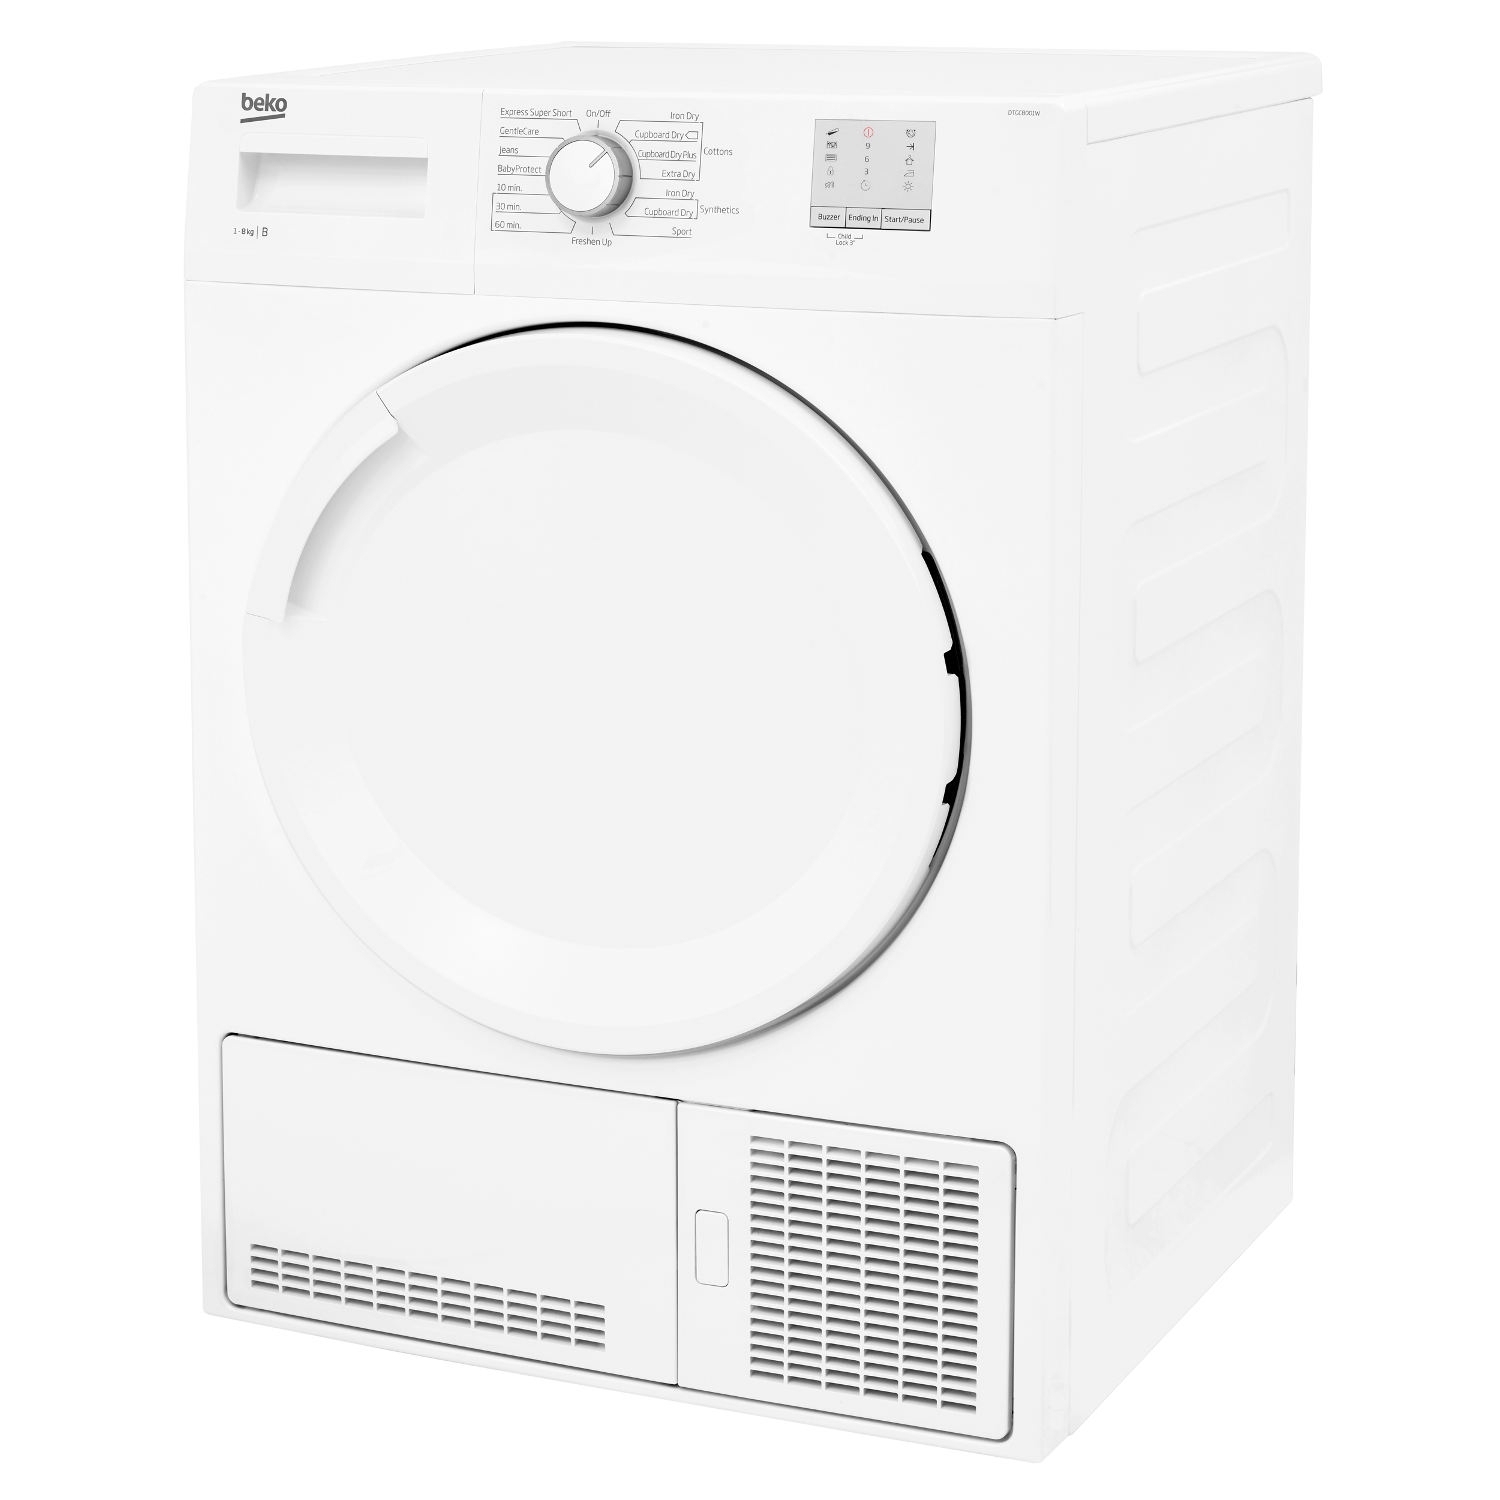 Beko 8kg Condenser Tumble Dryer - White - B Rated - 1